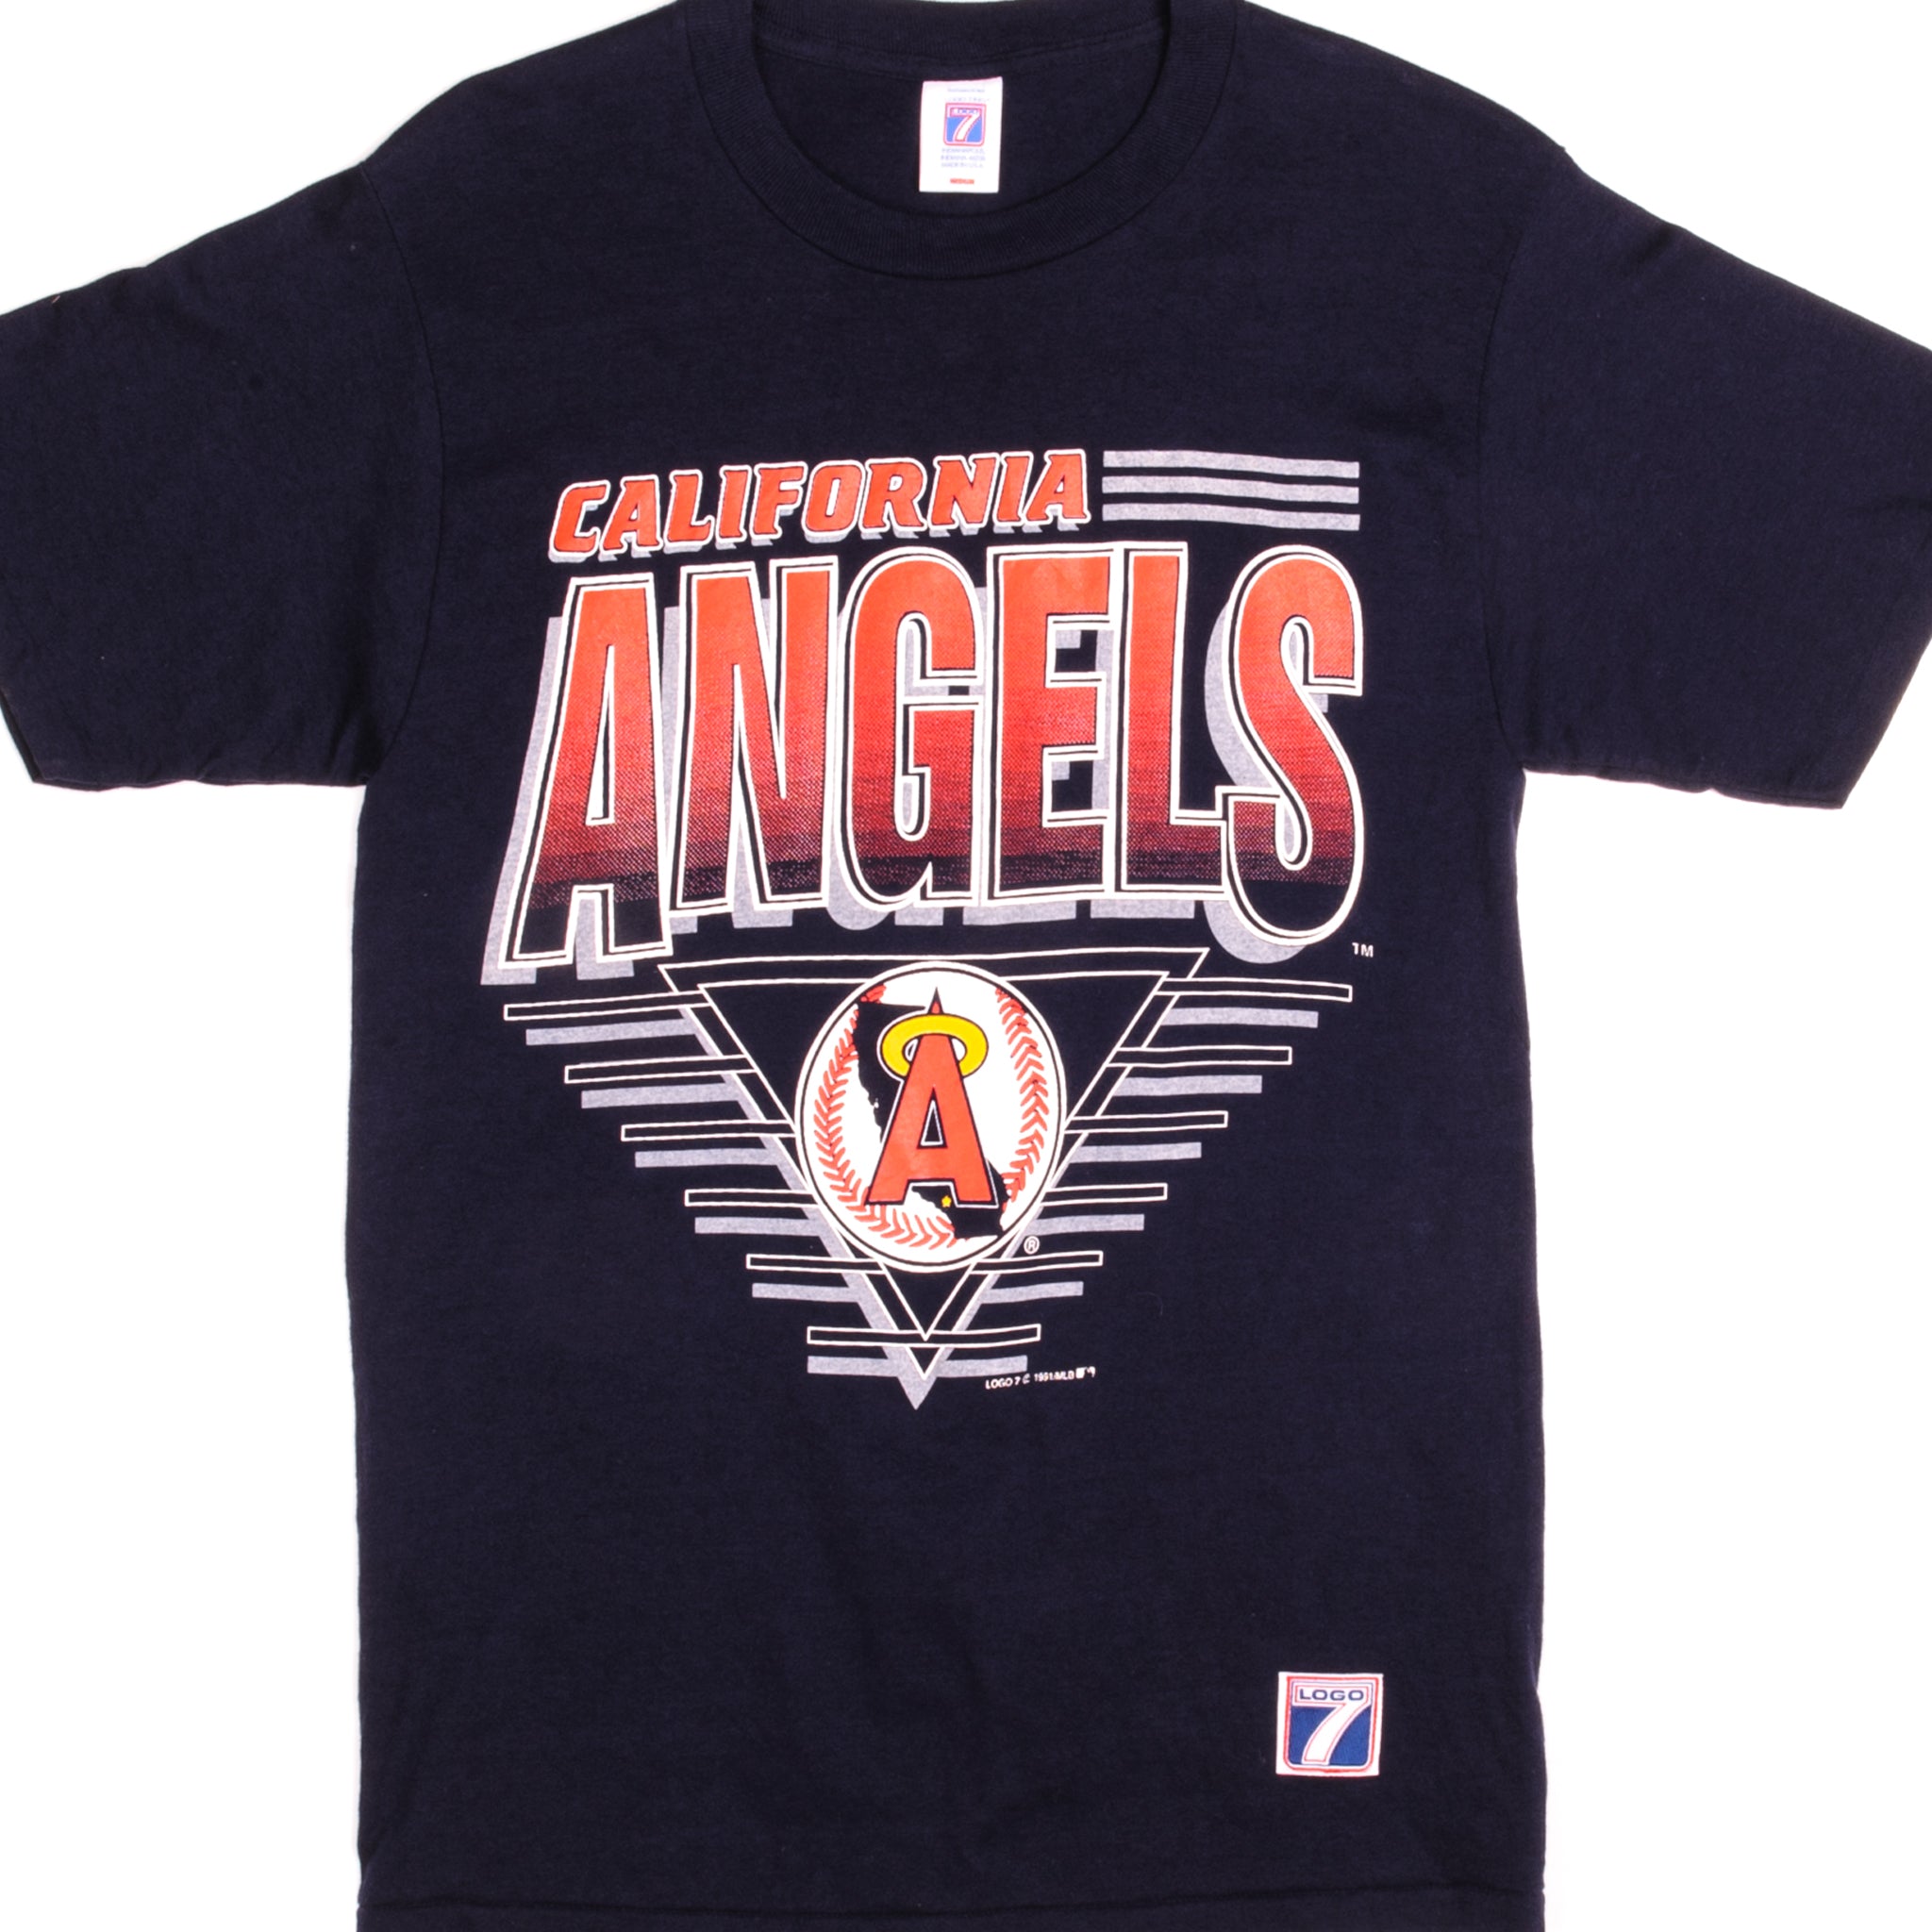  Angels Baseball Shirt